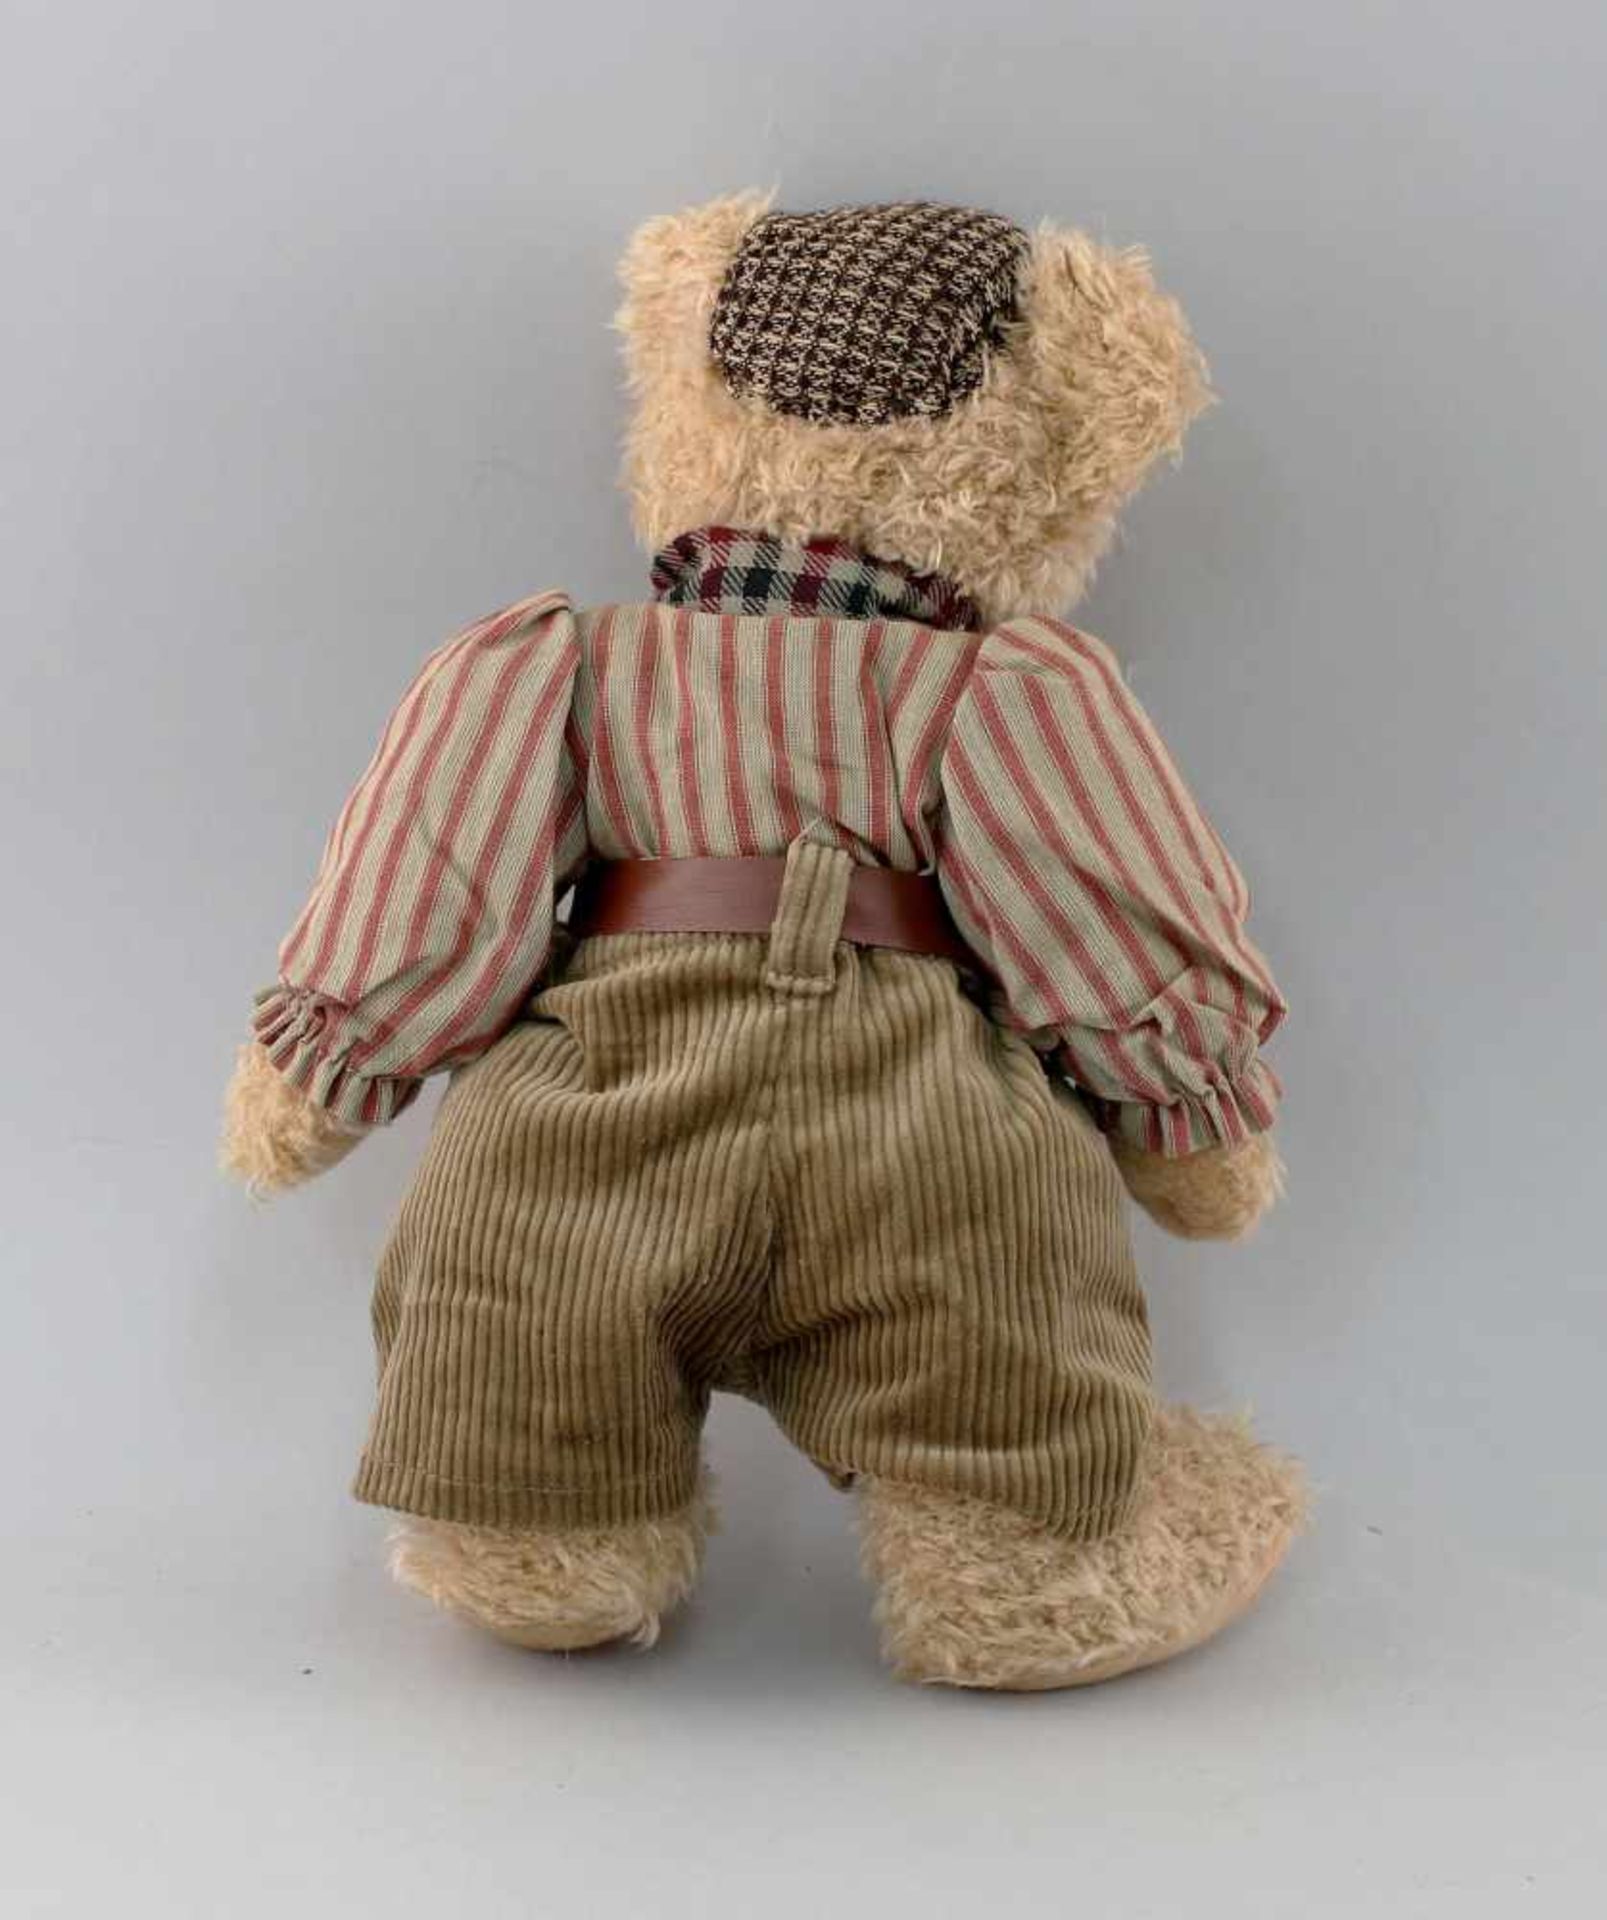 Teddy als Pfeifenraucher - Image 2 of 2